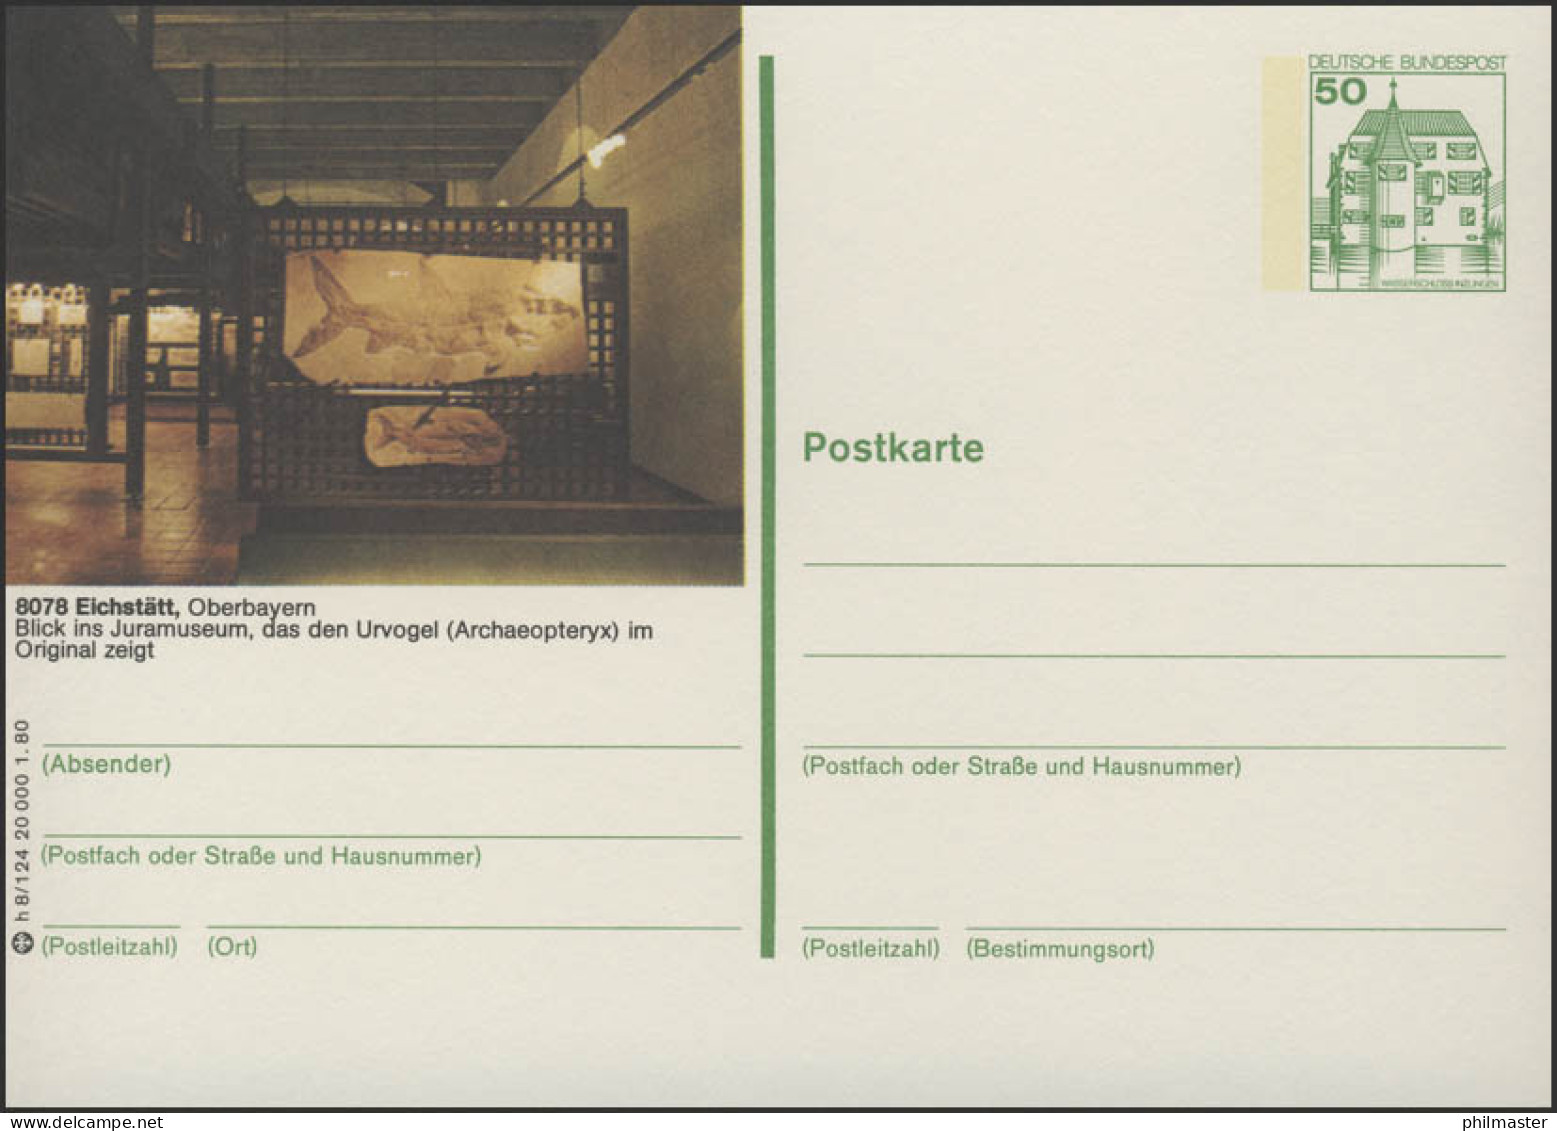 P130-h8/124 - 8078 Eichstädt, Jura-Museum ** - Illustrated Postcards - Mint